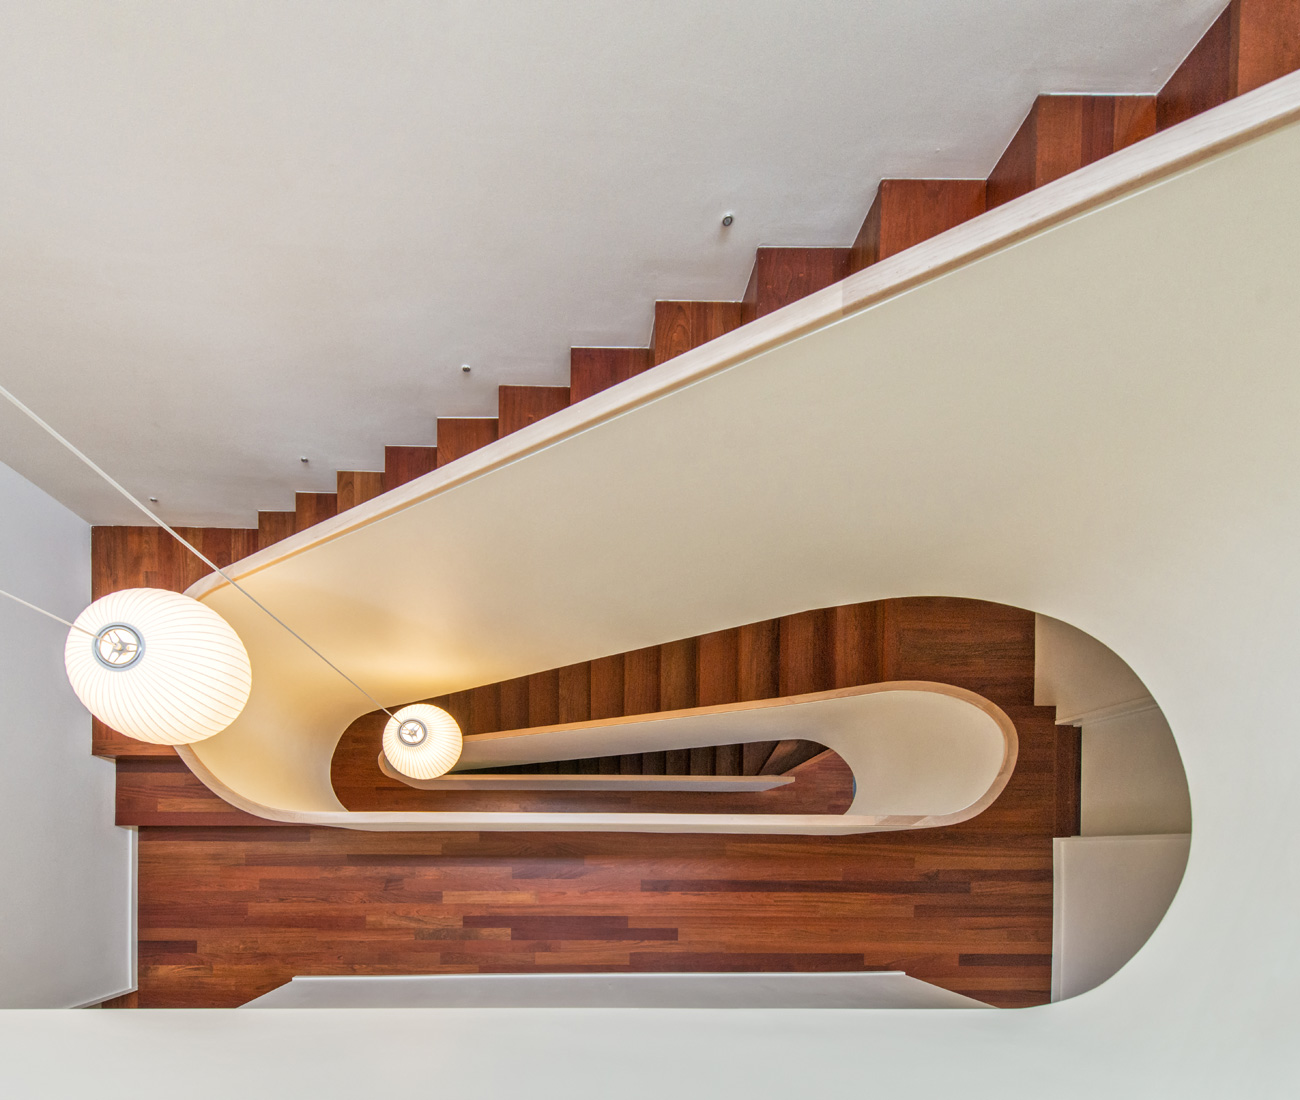 Curved stairs design - Williamson Williamson architecture